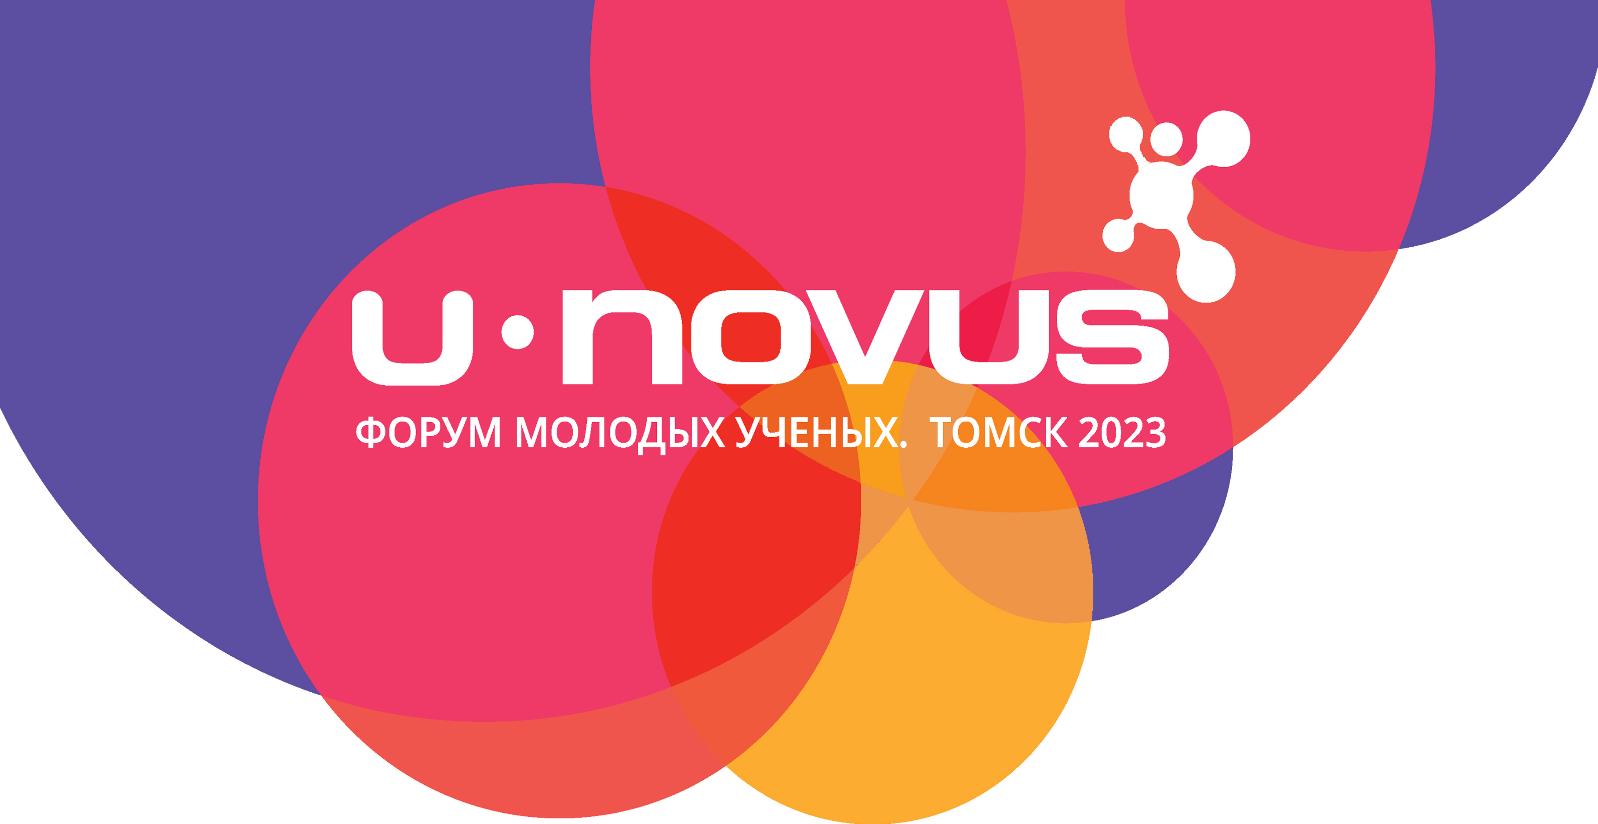 Лучшие идеи университетских стартапов презентуют на U-NOVUS-2023